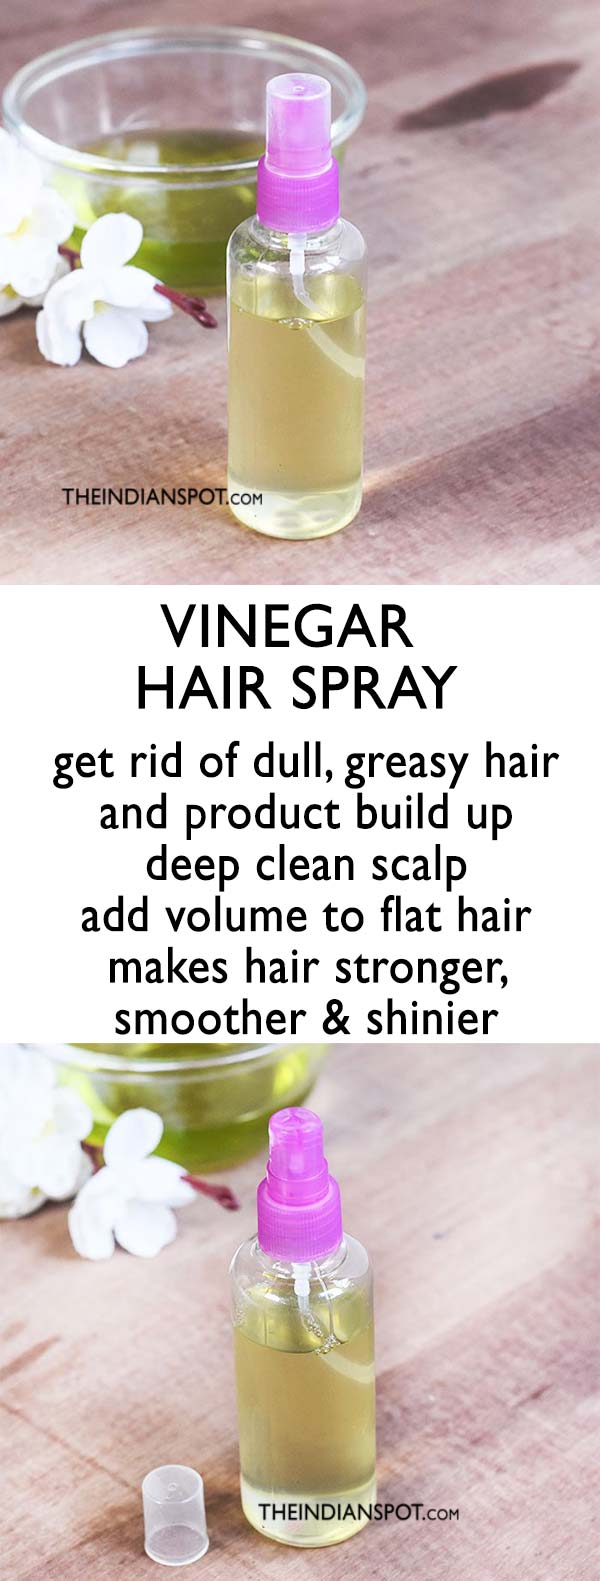 10 amazing Health benefits of Apple cider vinegar